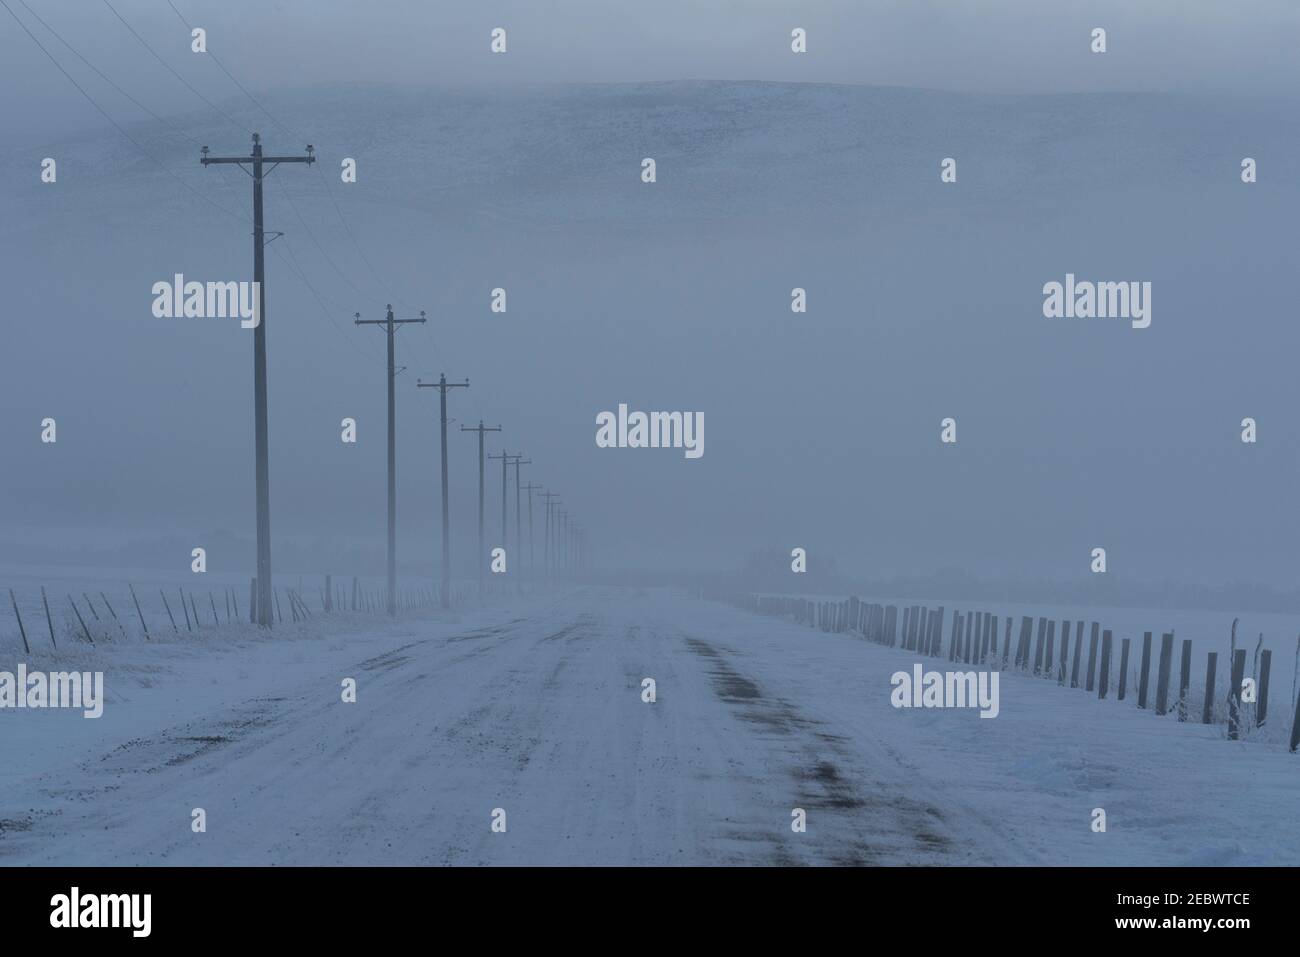 USA, Idaho, Bellevue, vuota strada rurale congelata in inverno Foto Stock